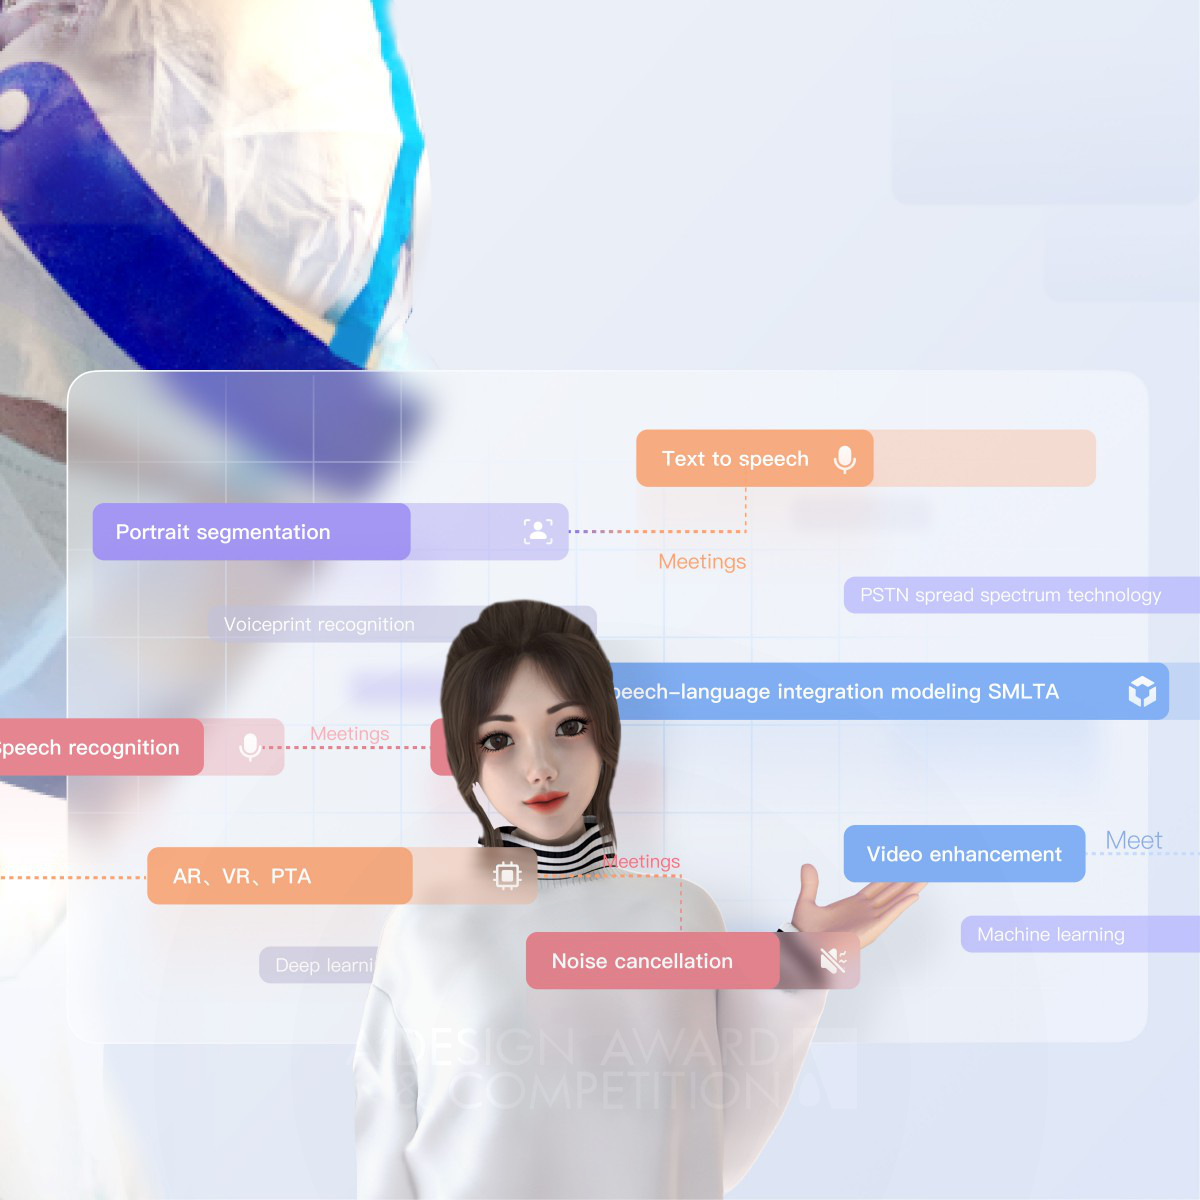 Baidu Online Network Technology (Beijing) Co., Ltd Interface